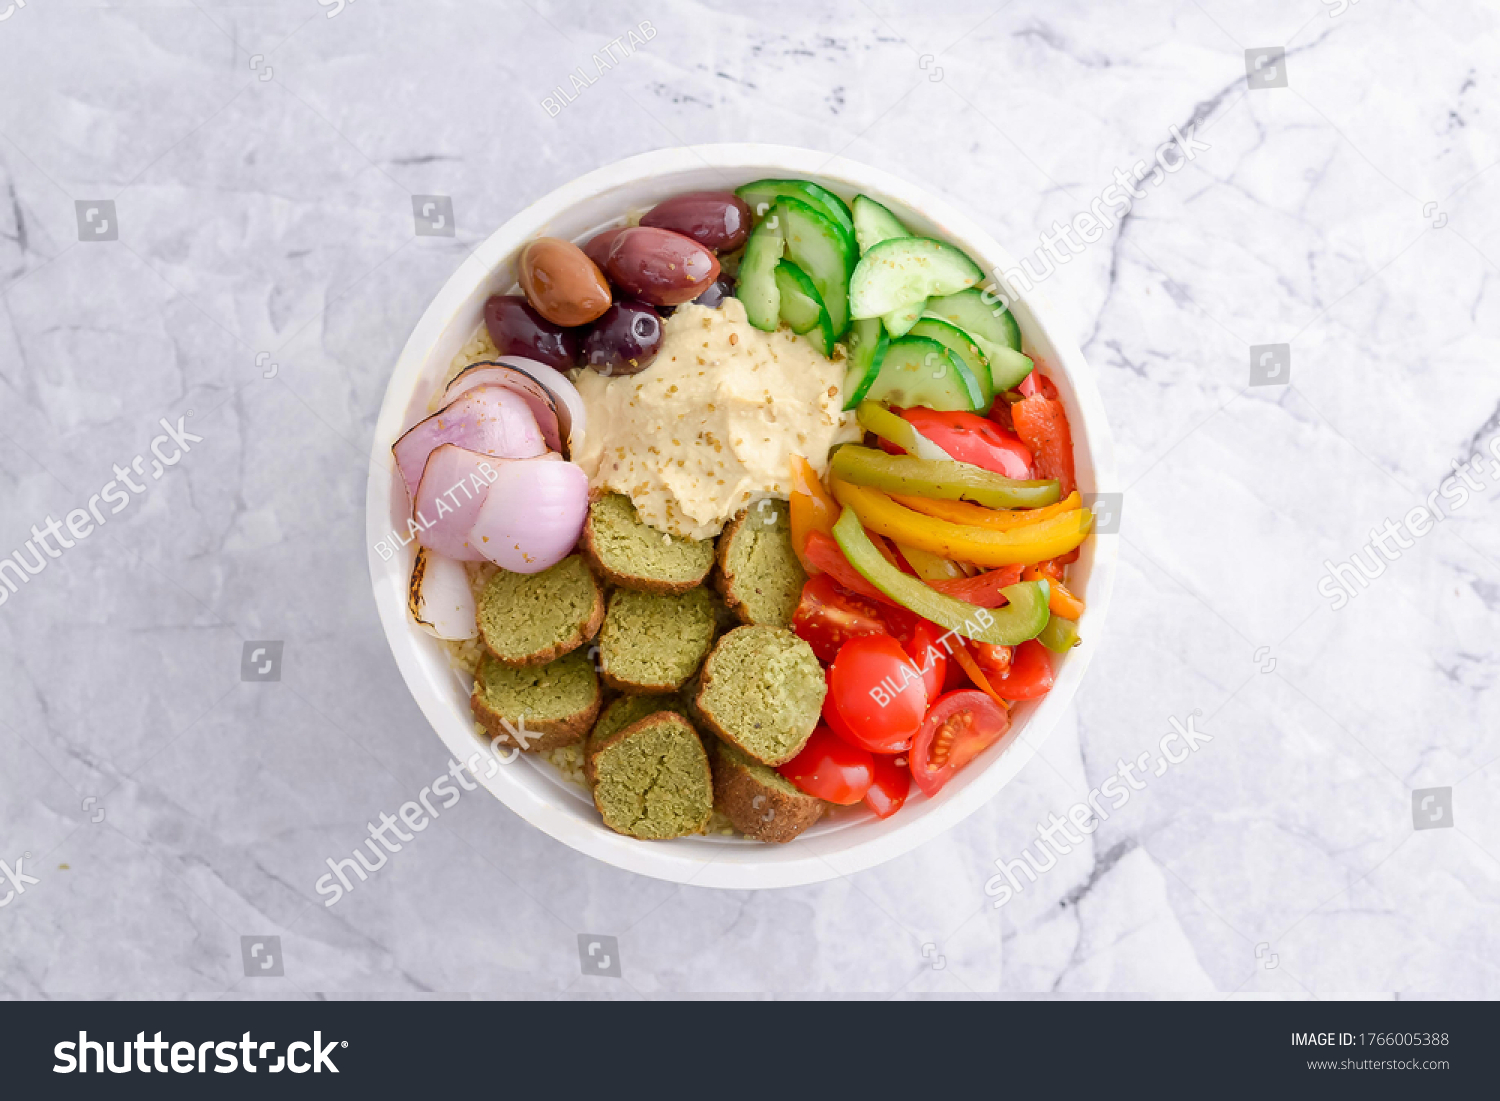 Falafel Healthy Food Bowl Plate Keto Stock Photo Edit Now 1766005388